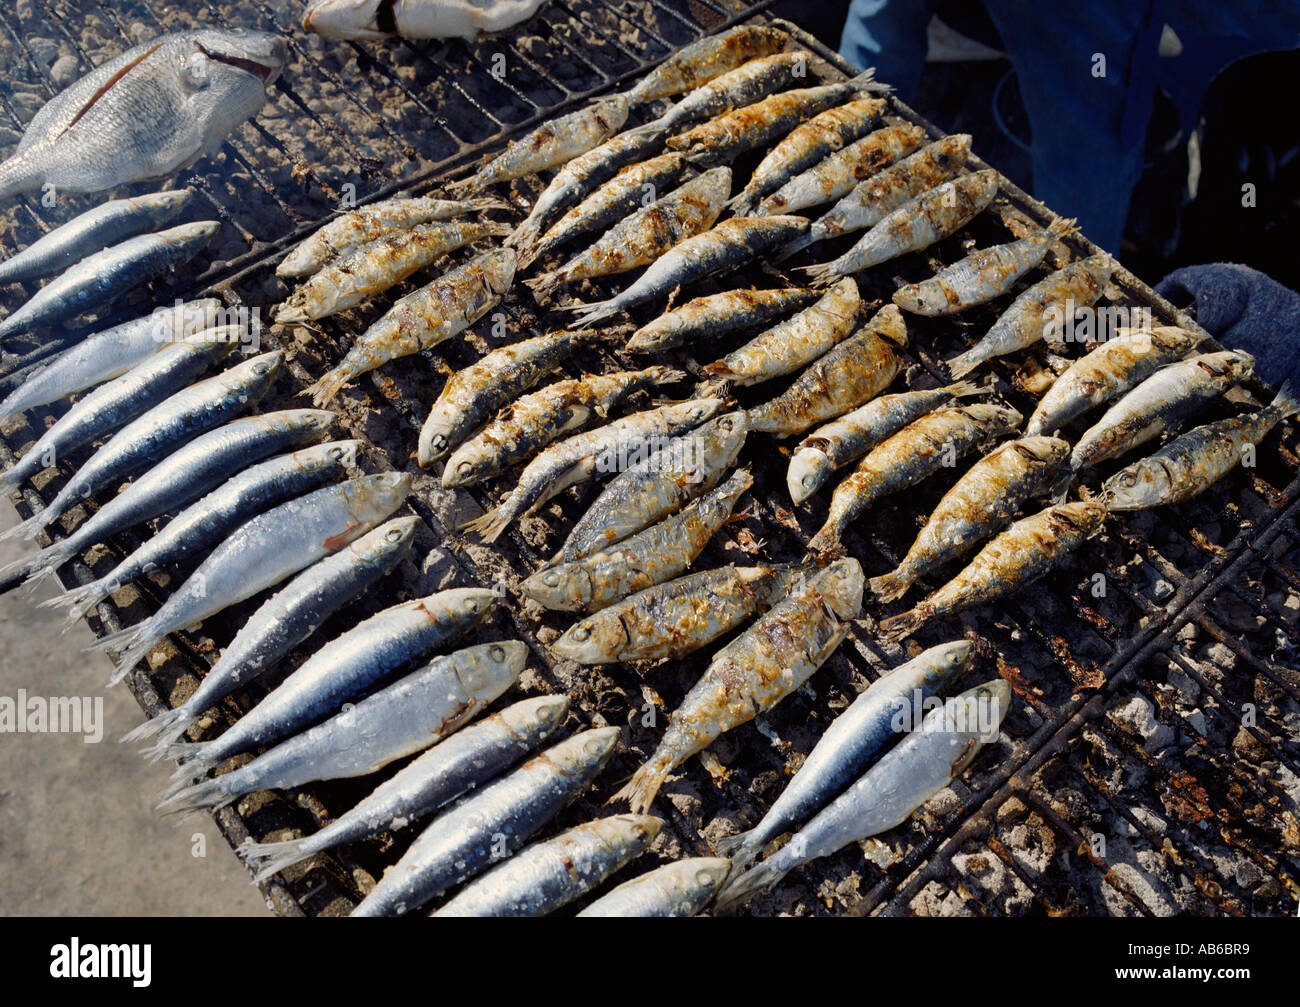 Portugal, Algarve, Portimão, Sardinen auf Holzkohlen-grill Stockfoto